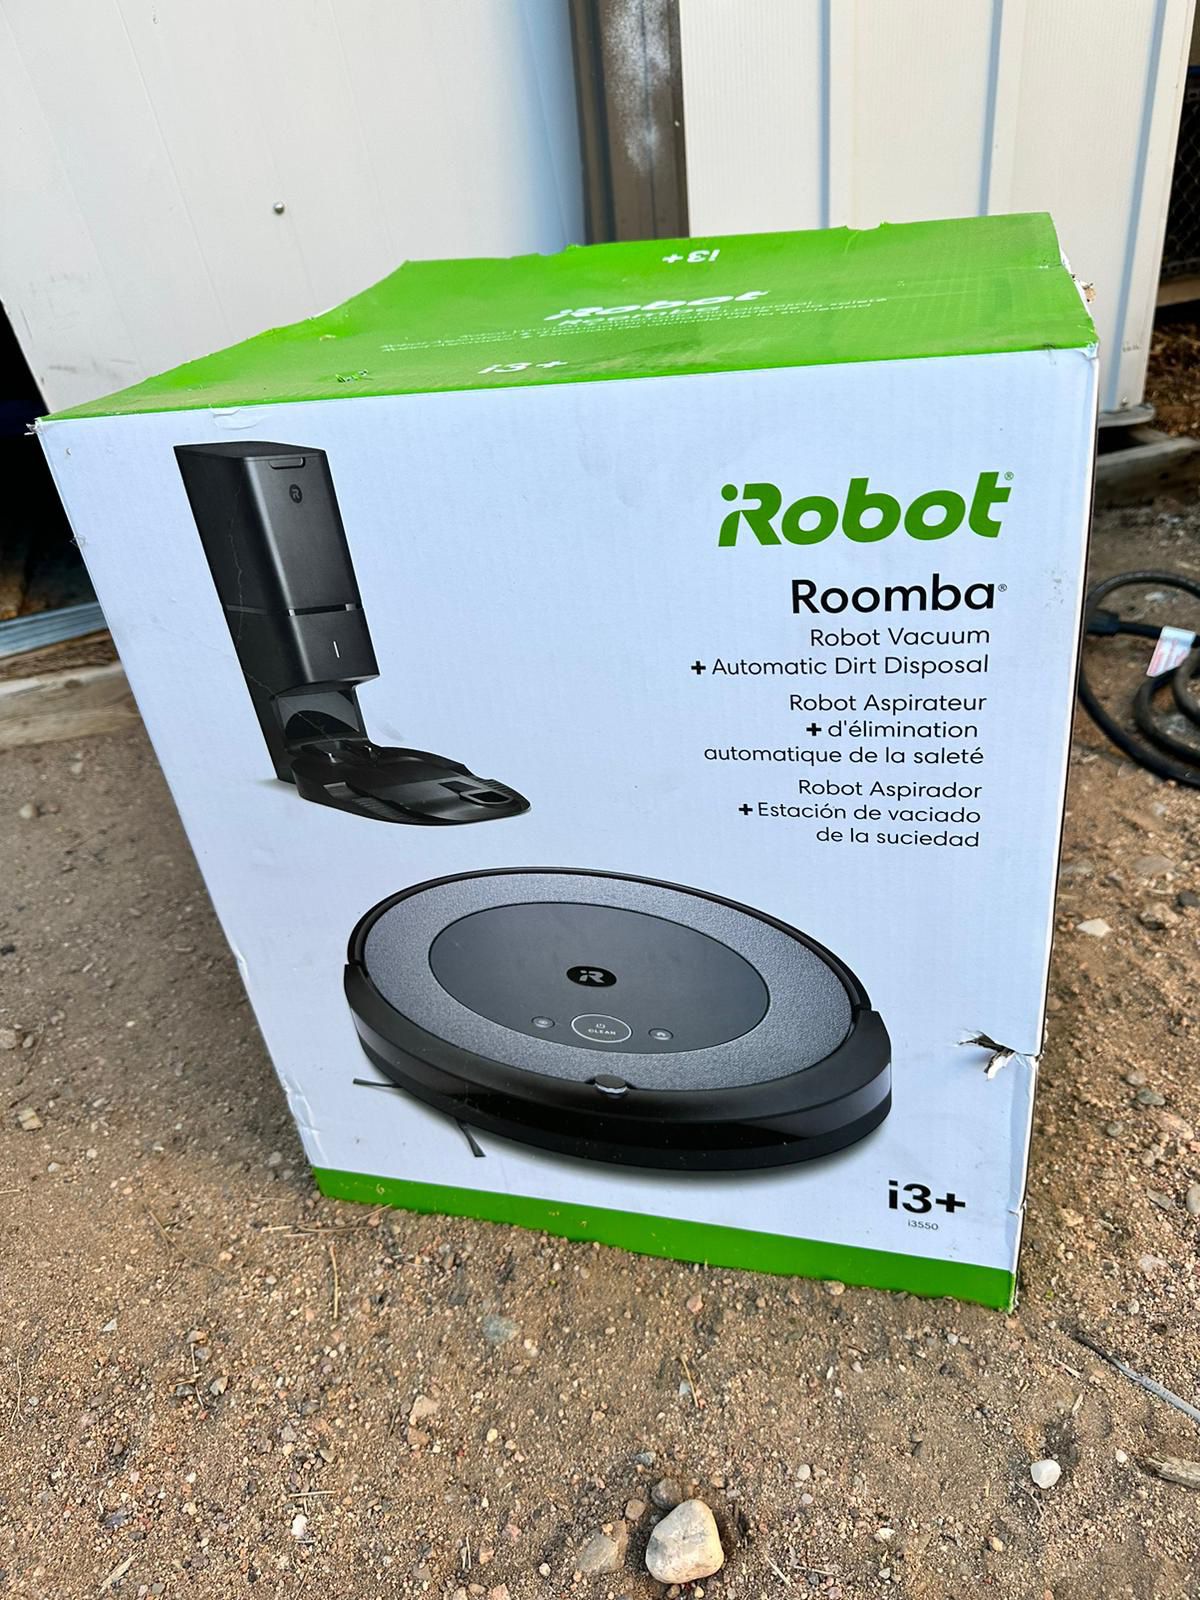 Roomba Electric Vacuum